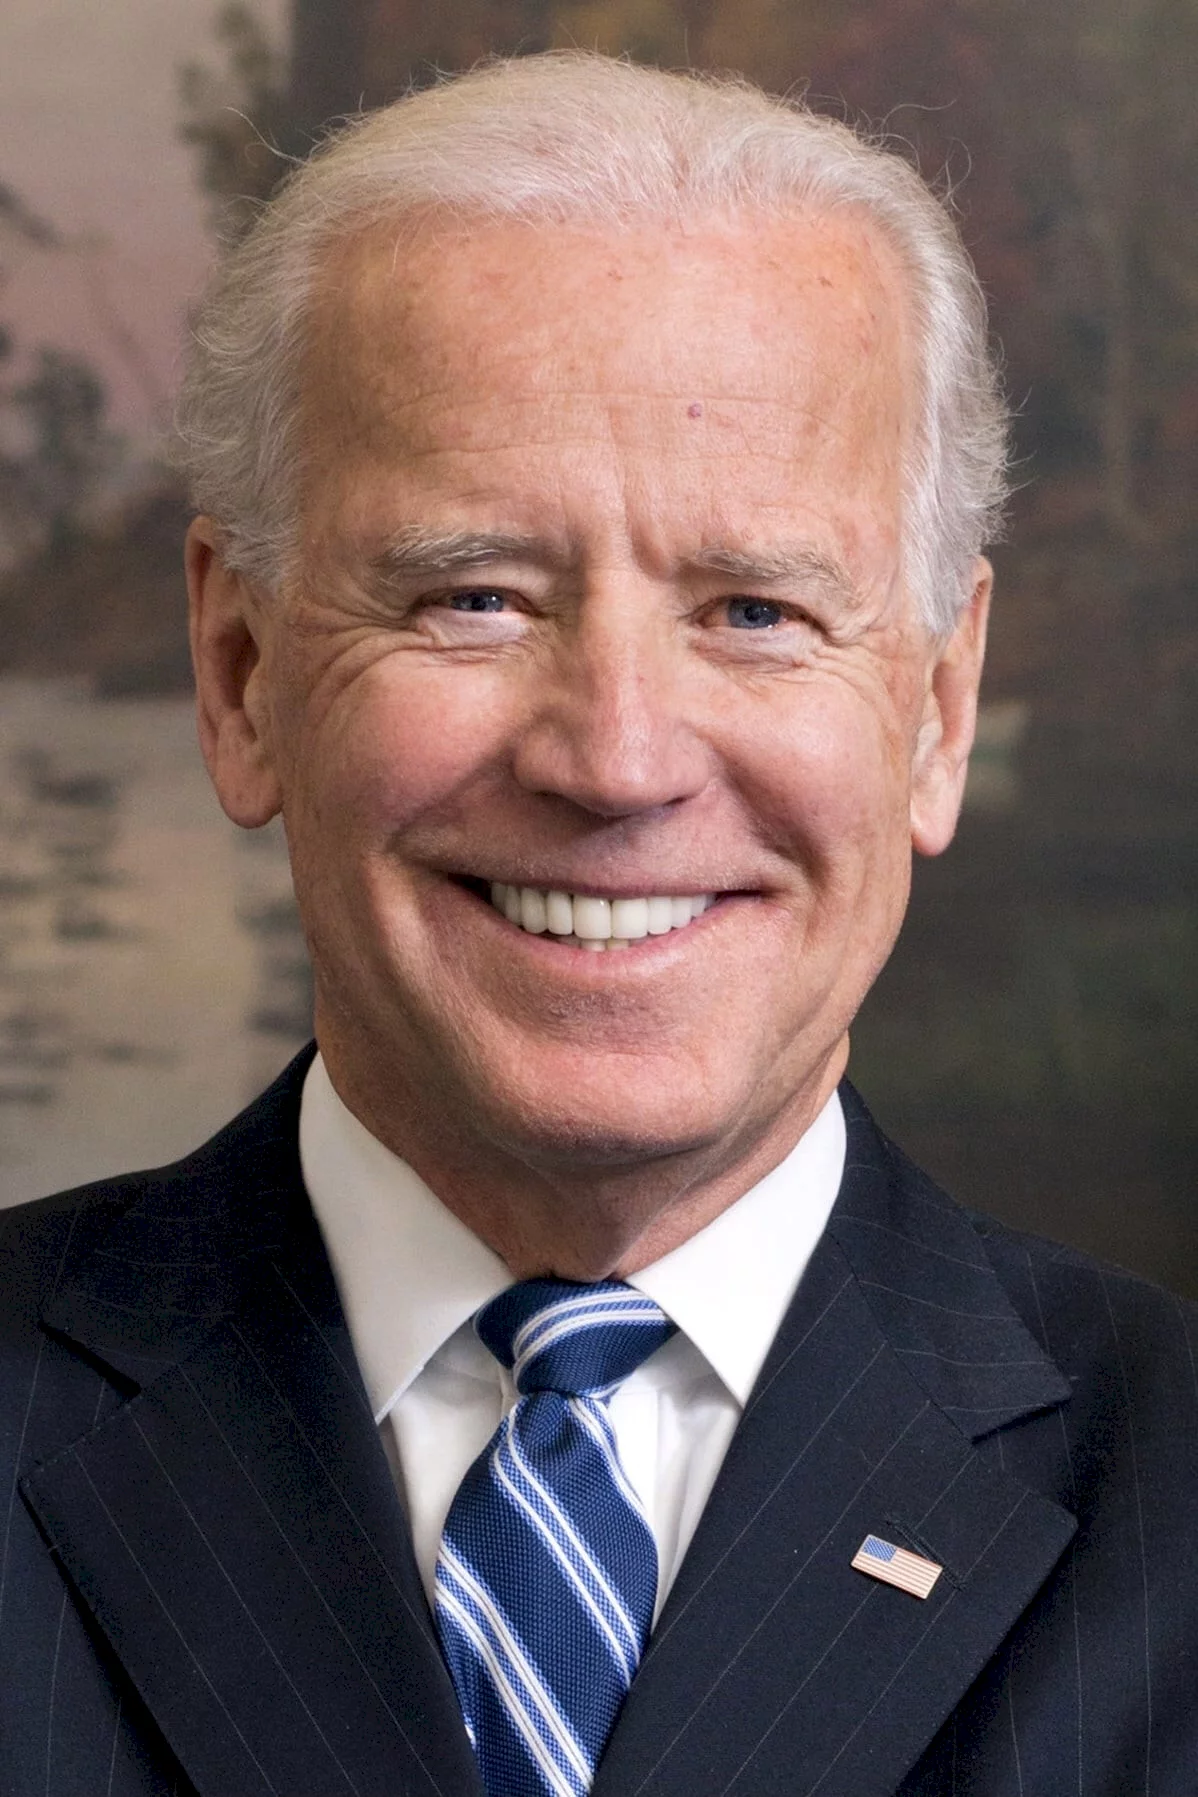  Joe Biden